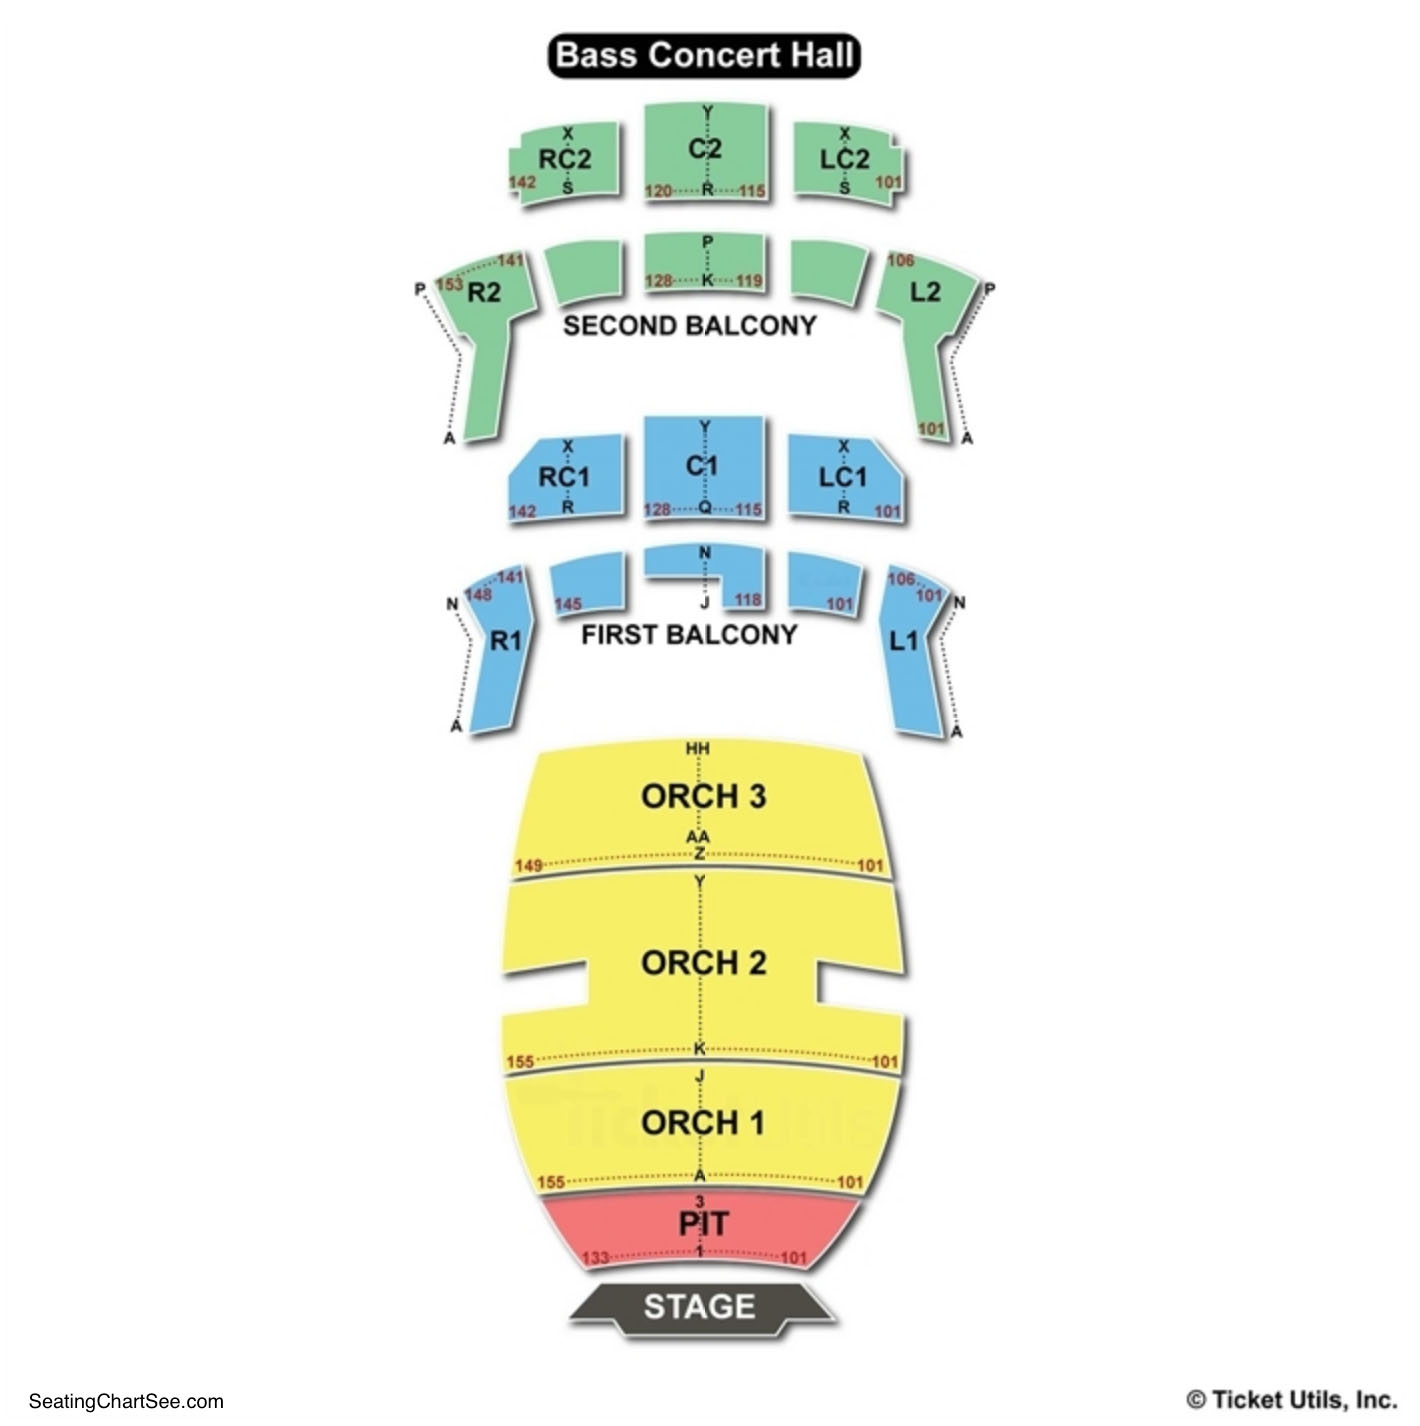 Bass Concert Hall Austin Interactive Seating Chart